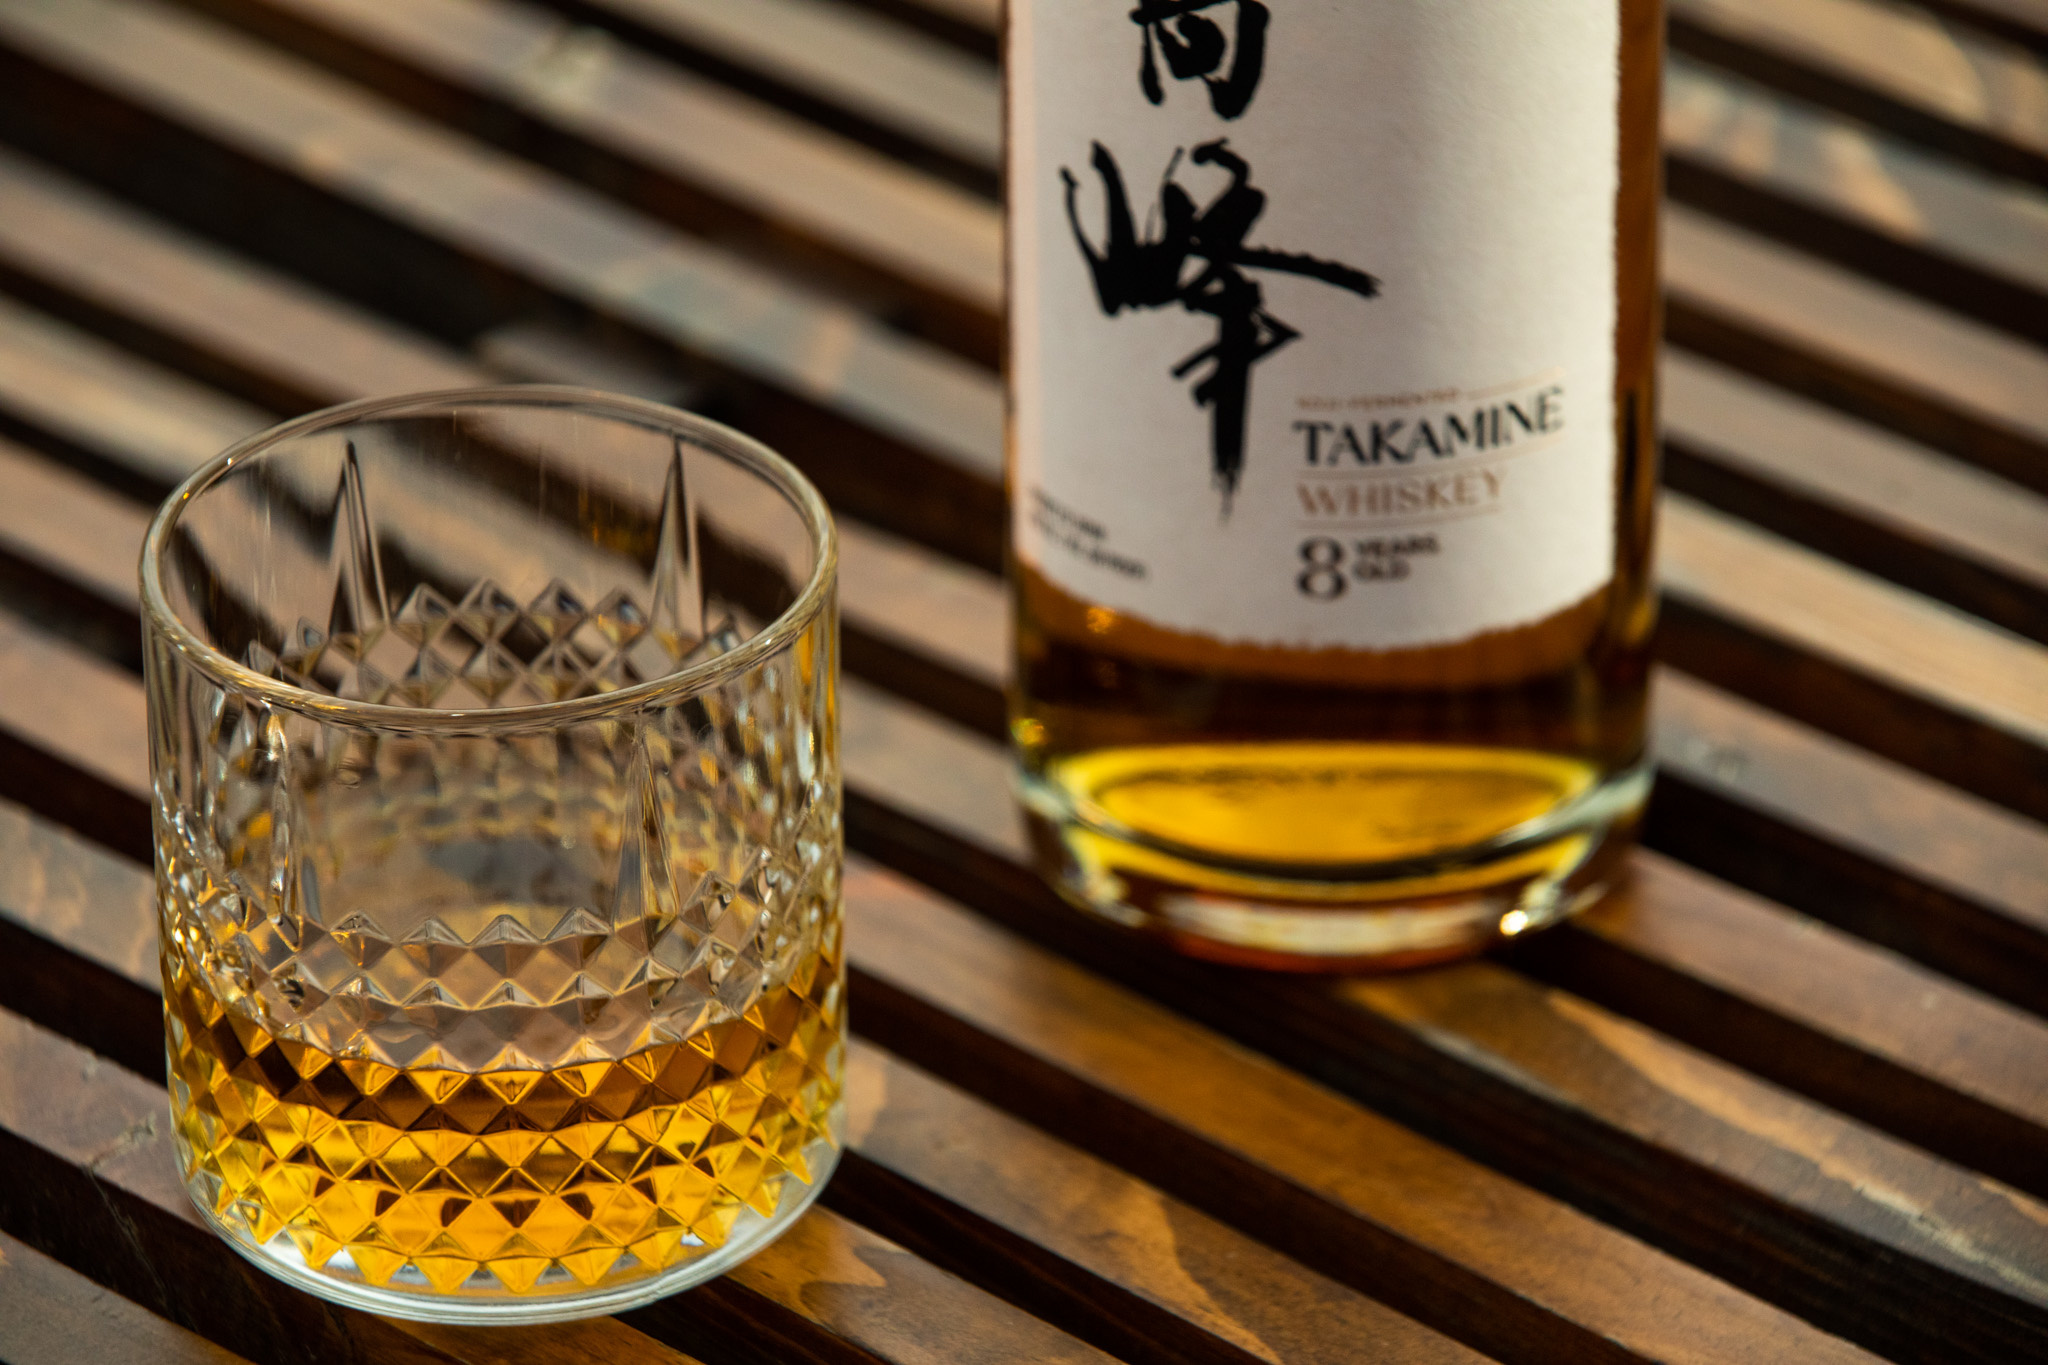 Takamine 8-year Whisky